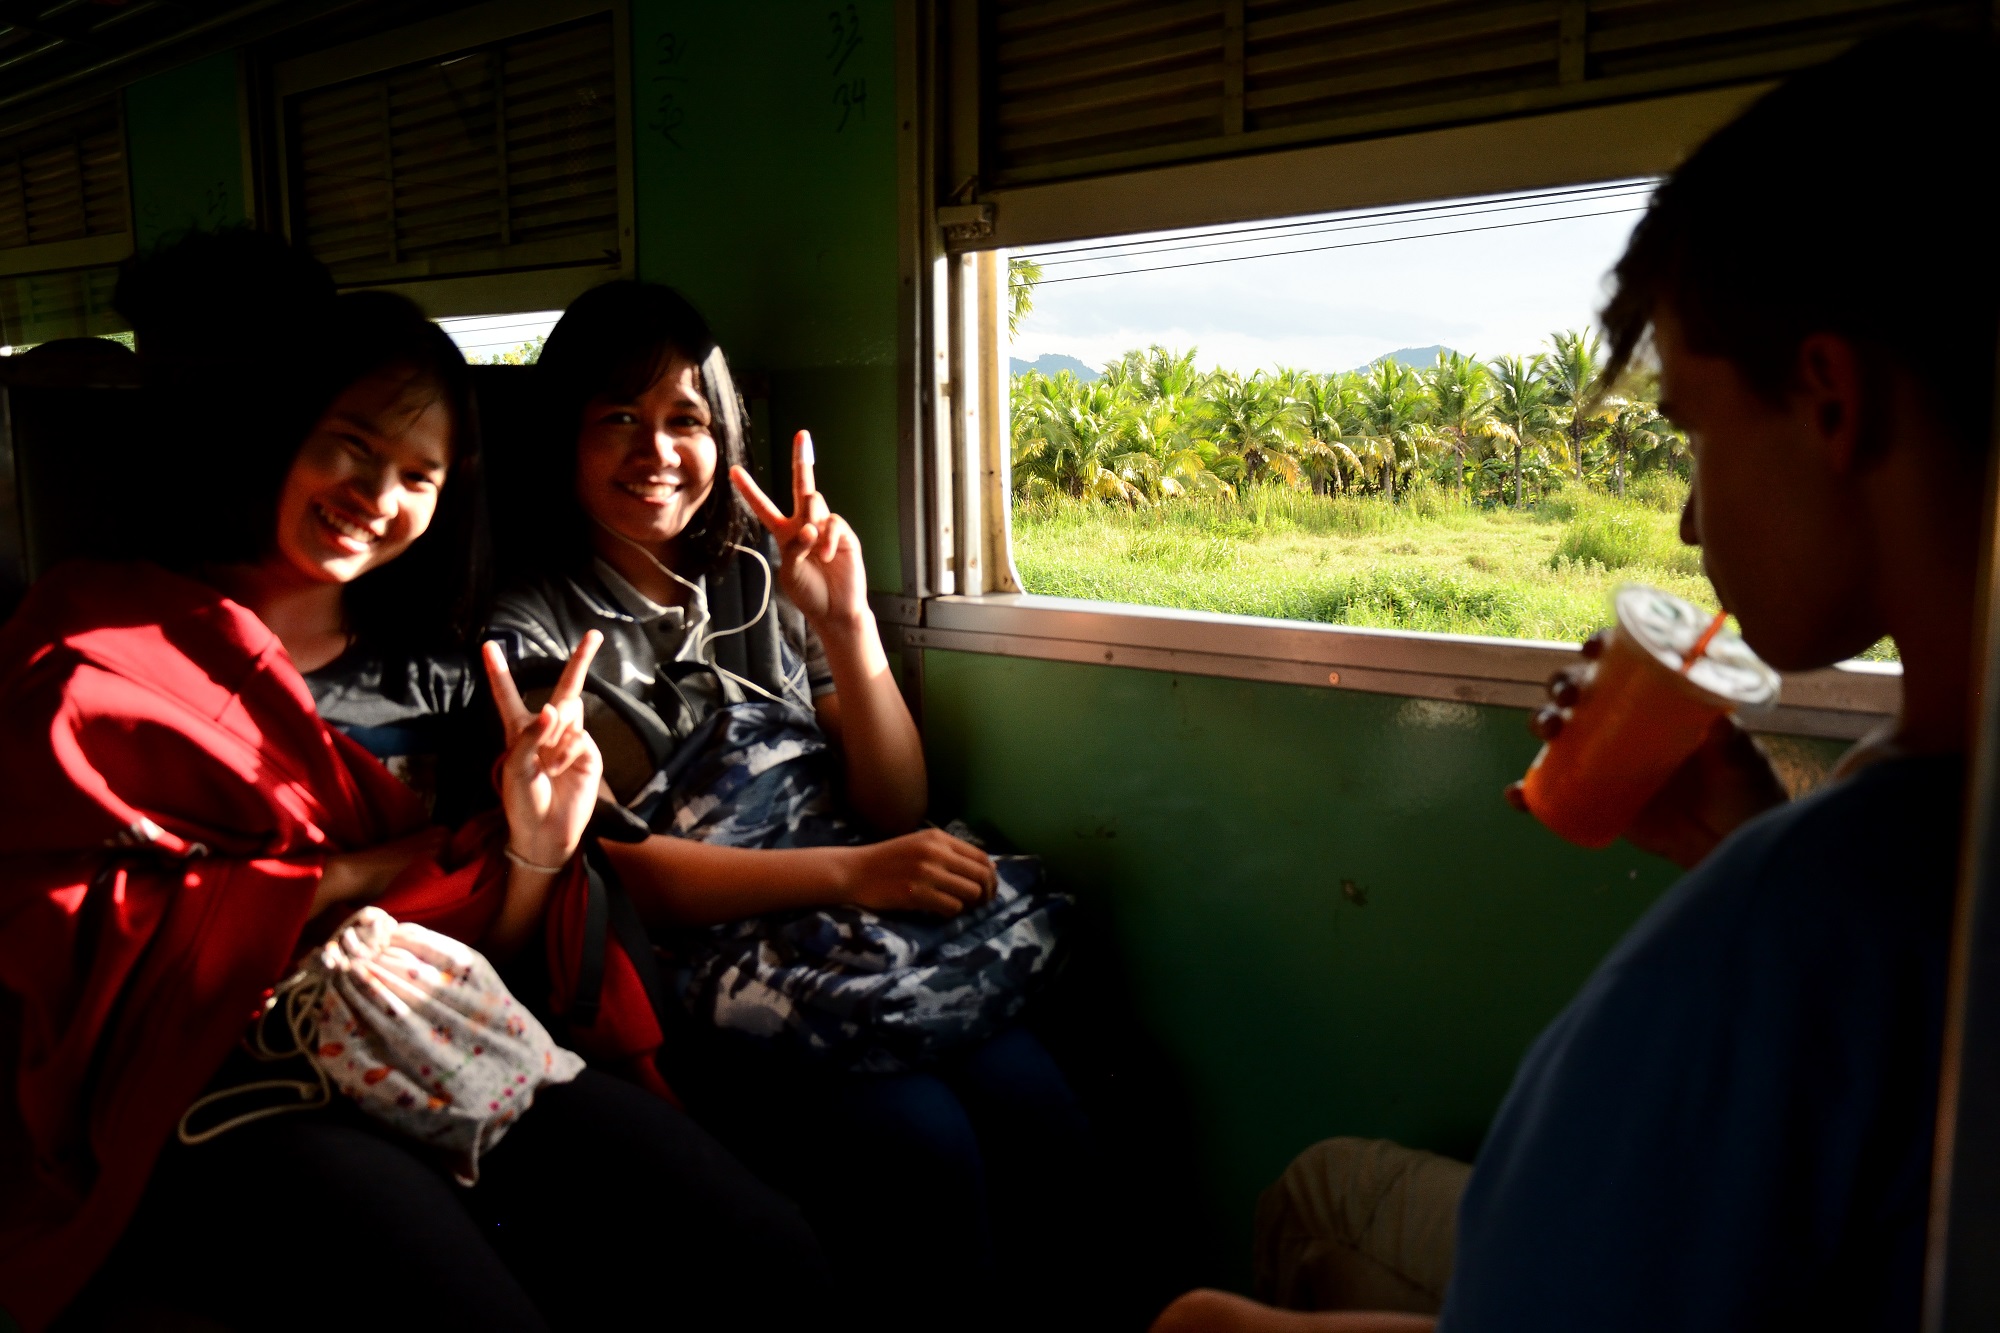 Thai girls on board the train heading south